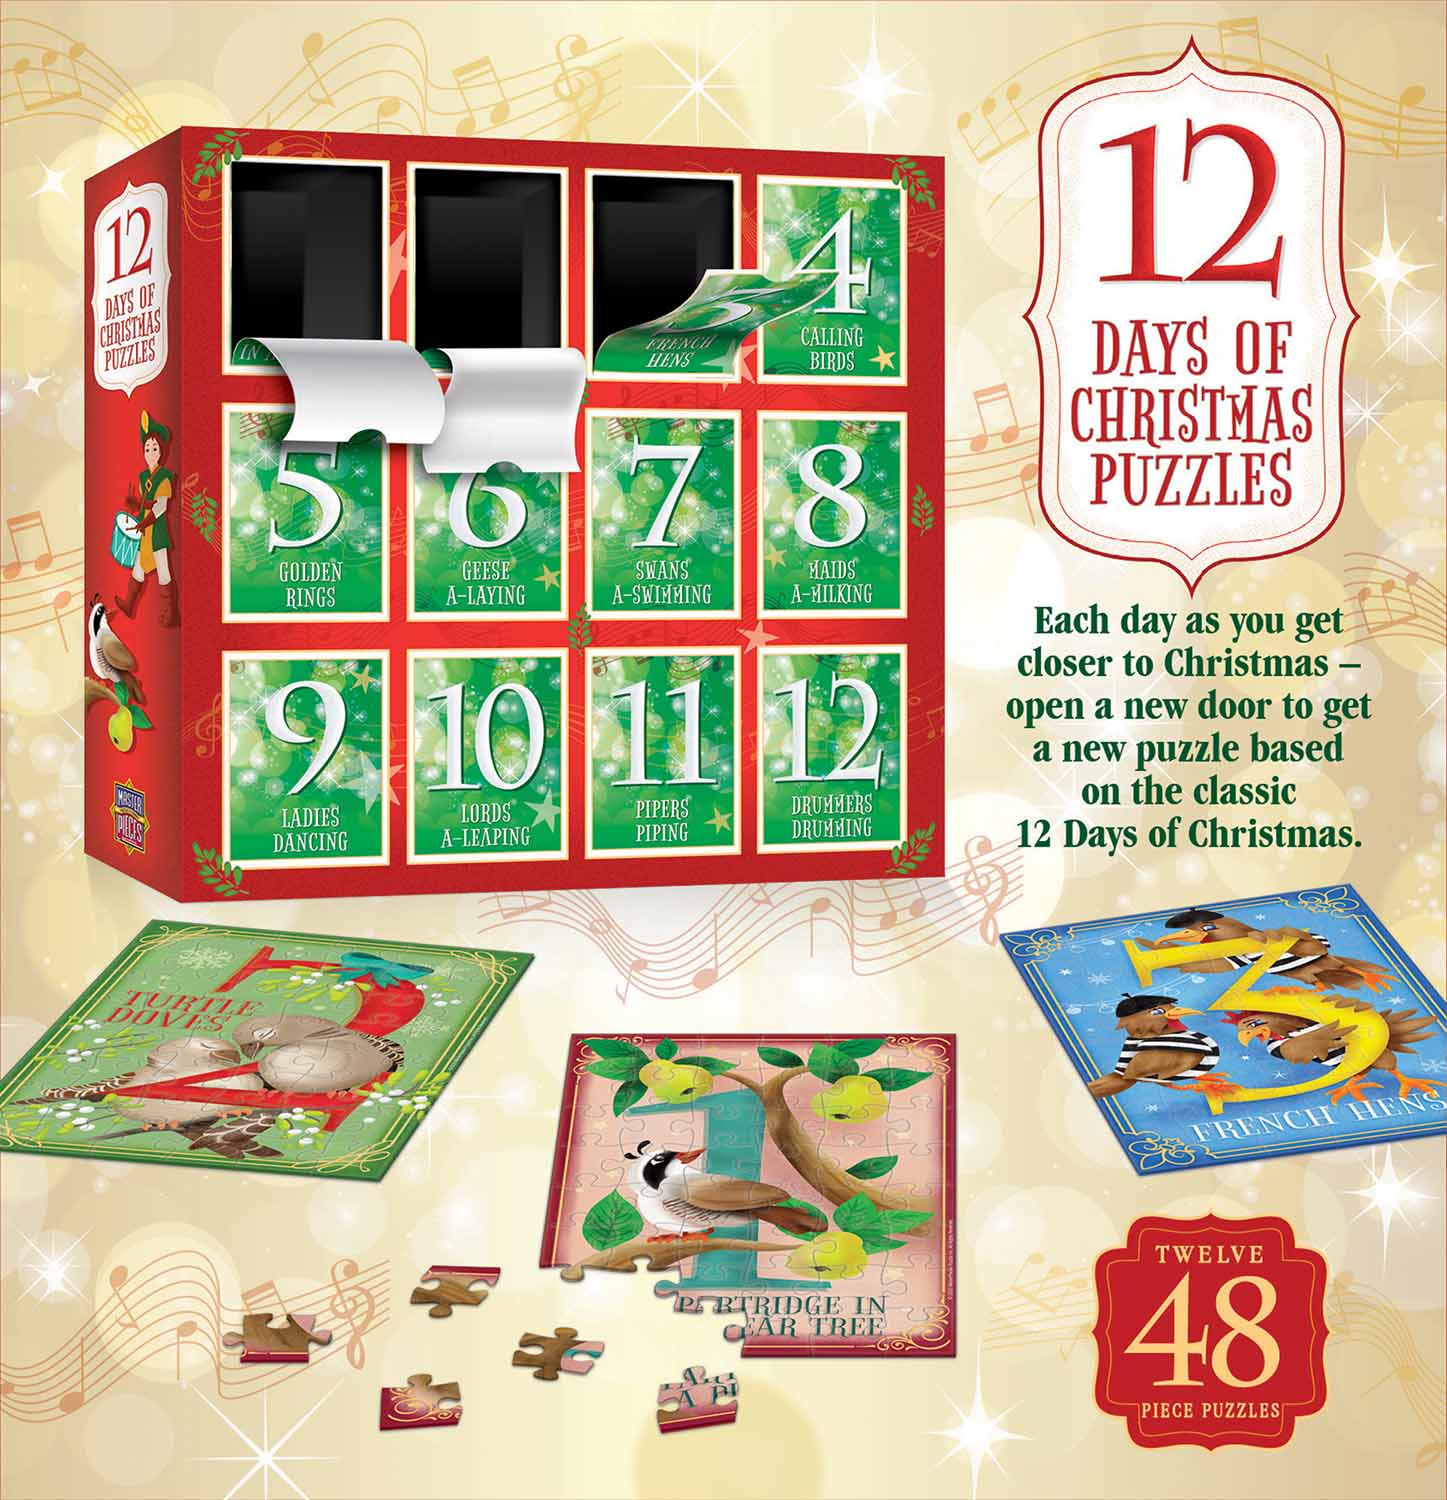 12 Days of Puzzles - Advent Calendar Christmas Children's Puzzles